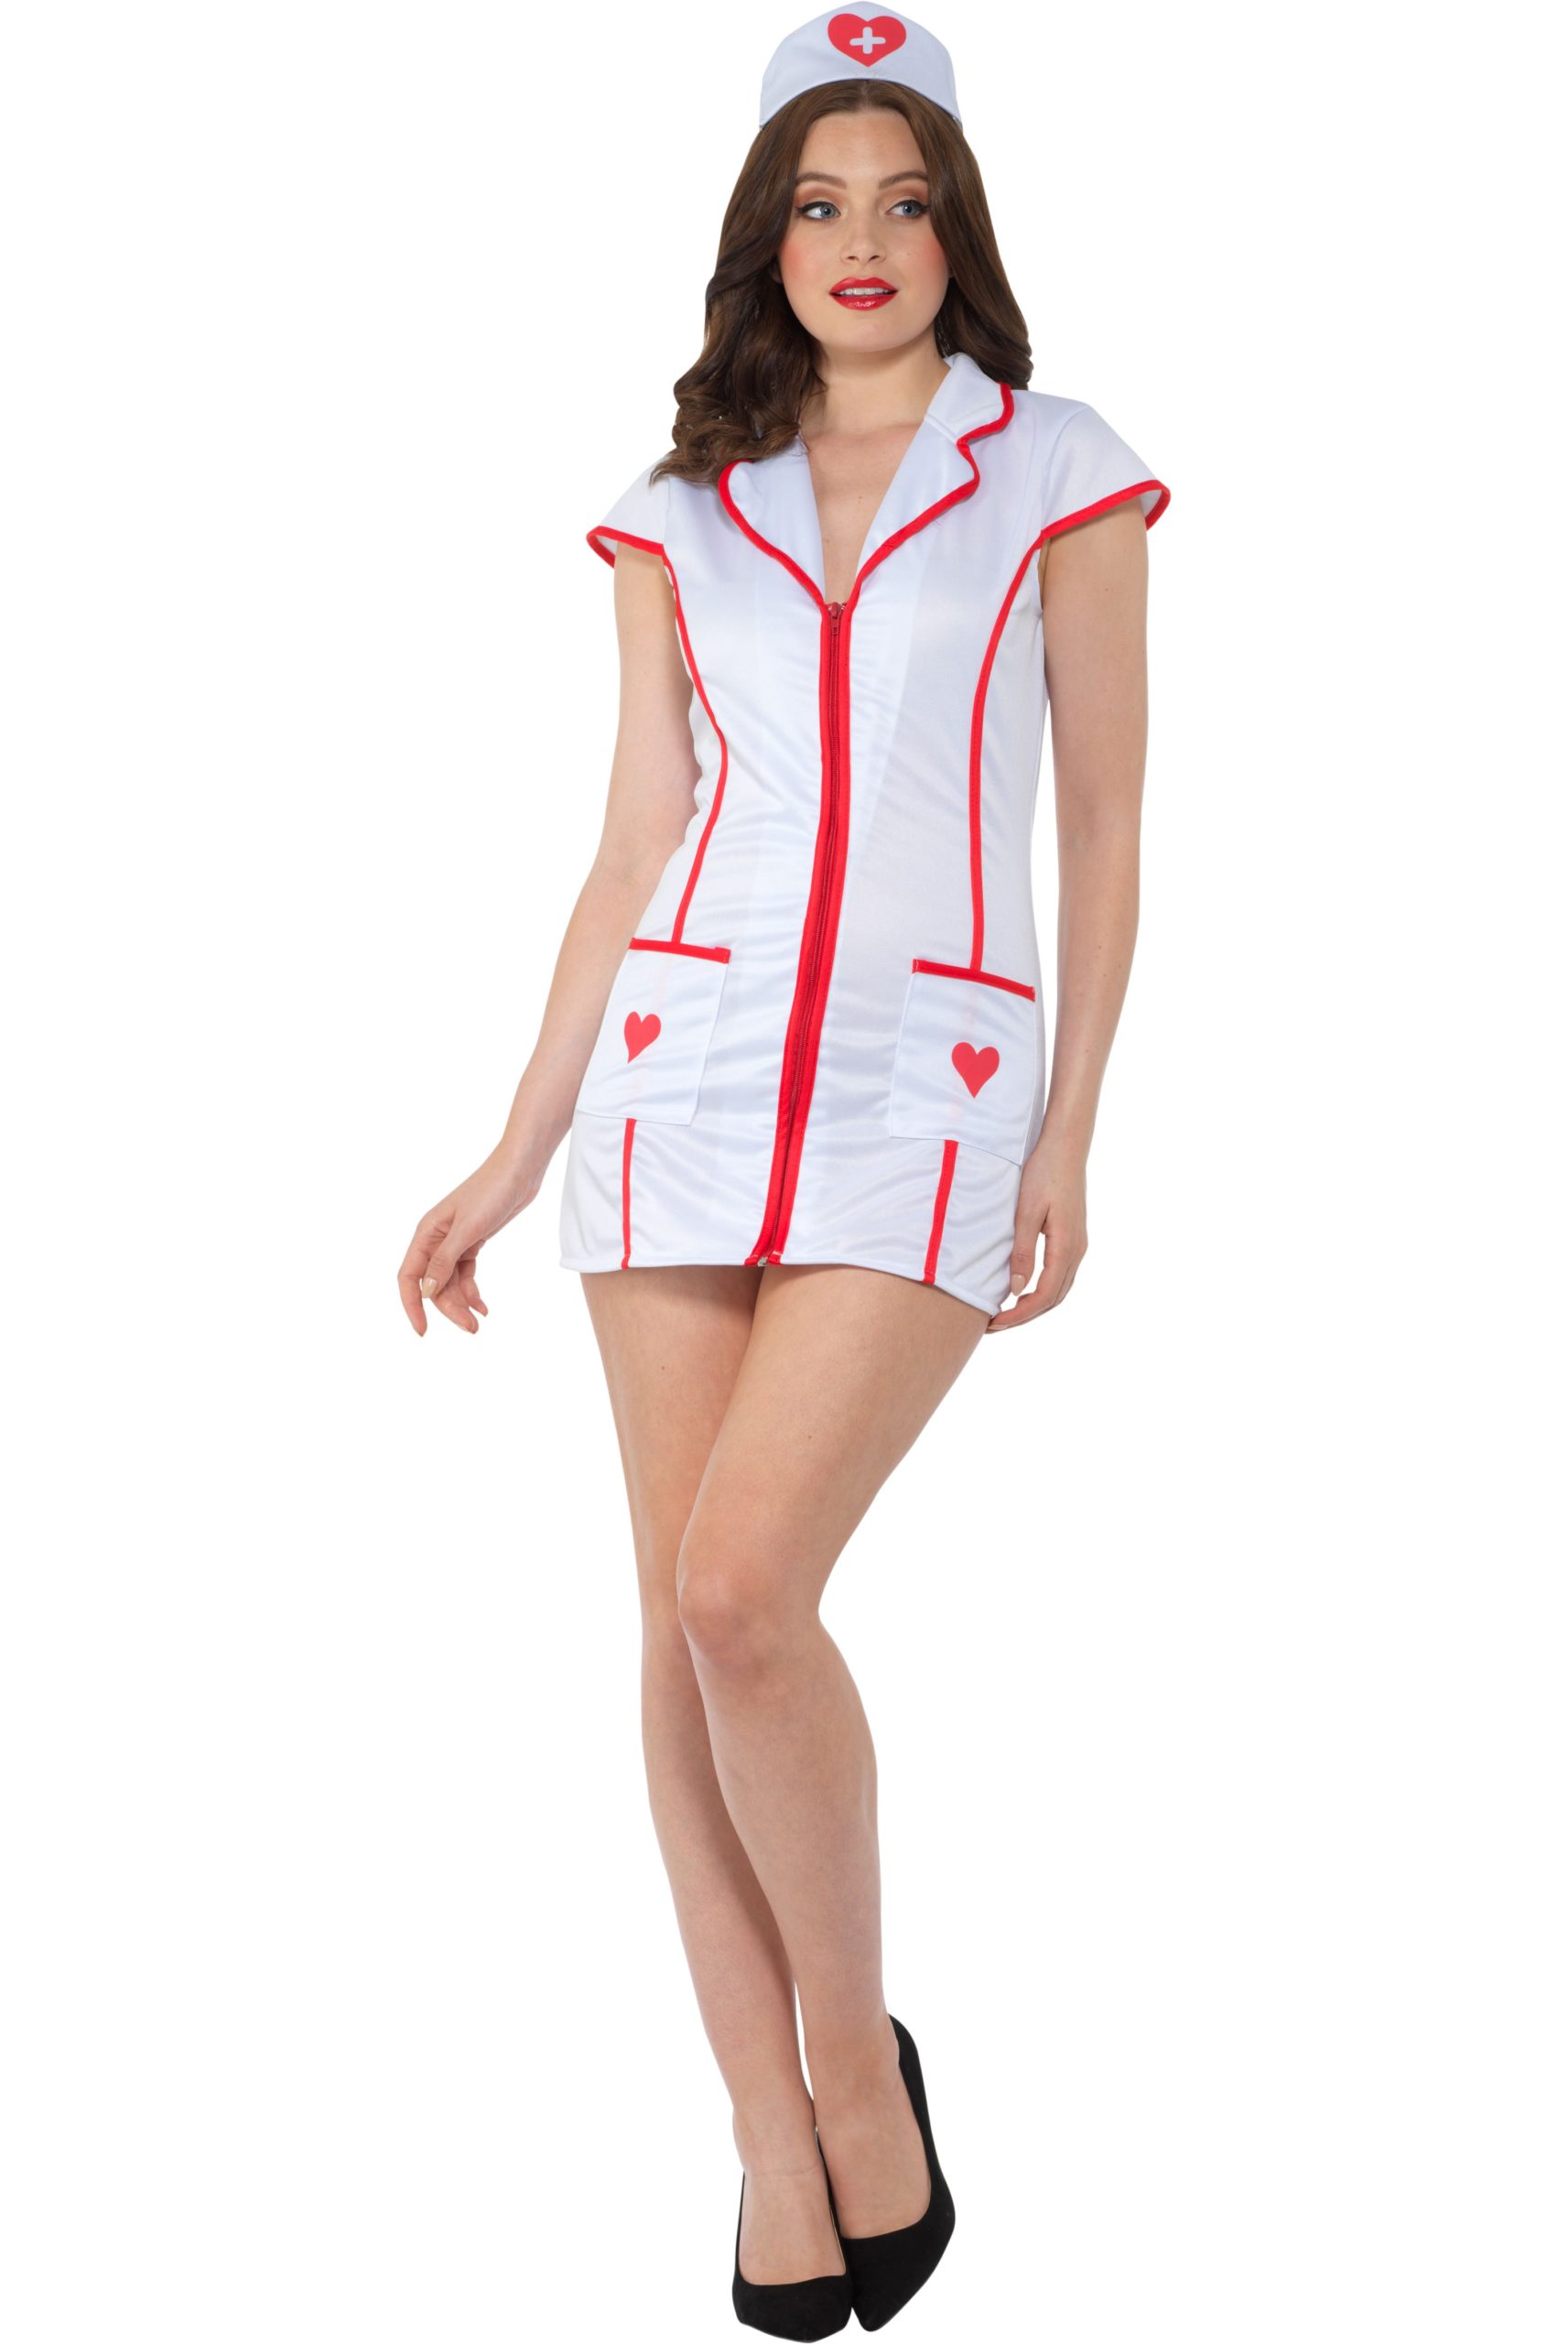 Sexy Nurse Costume Party Australia 1232